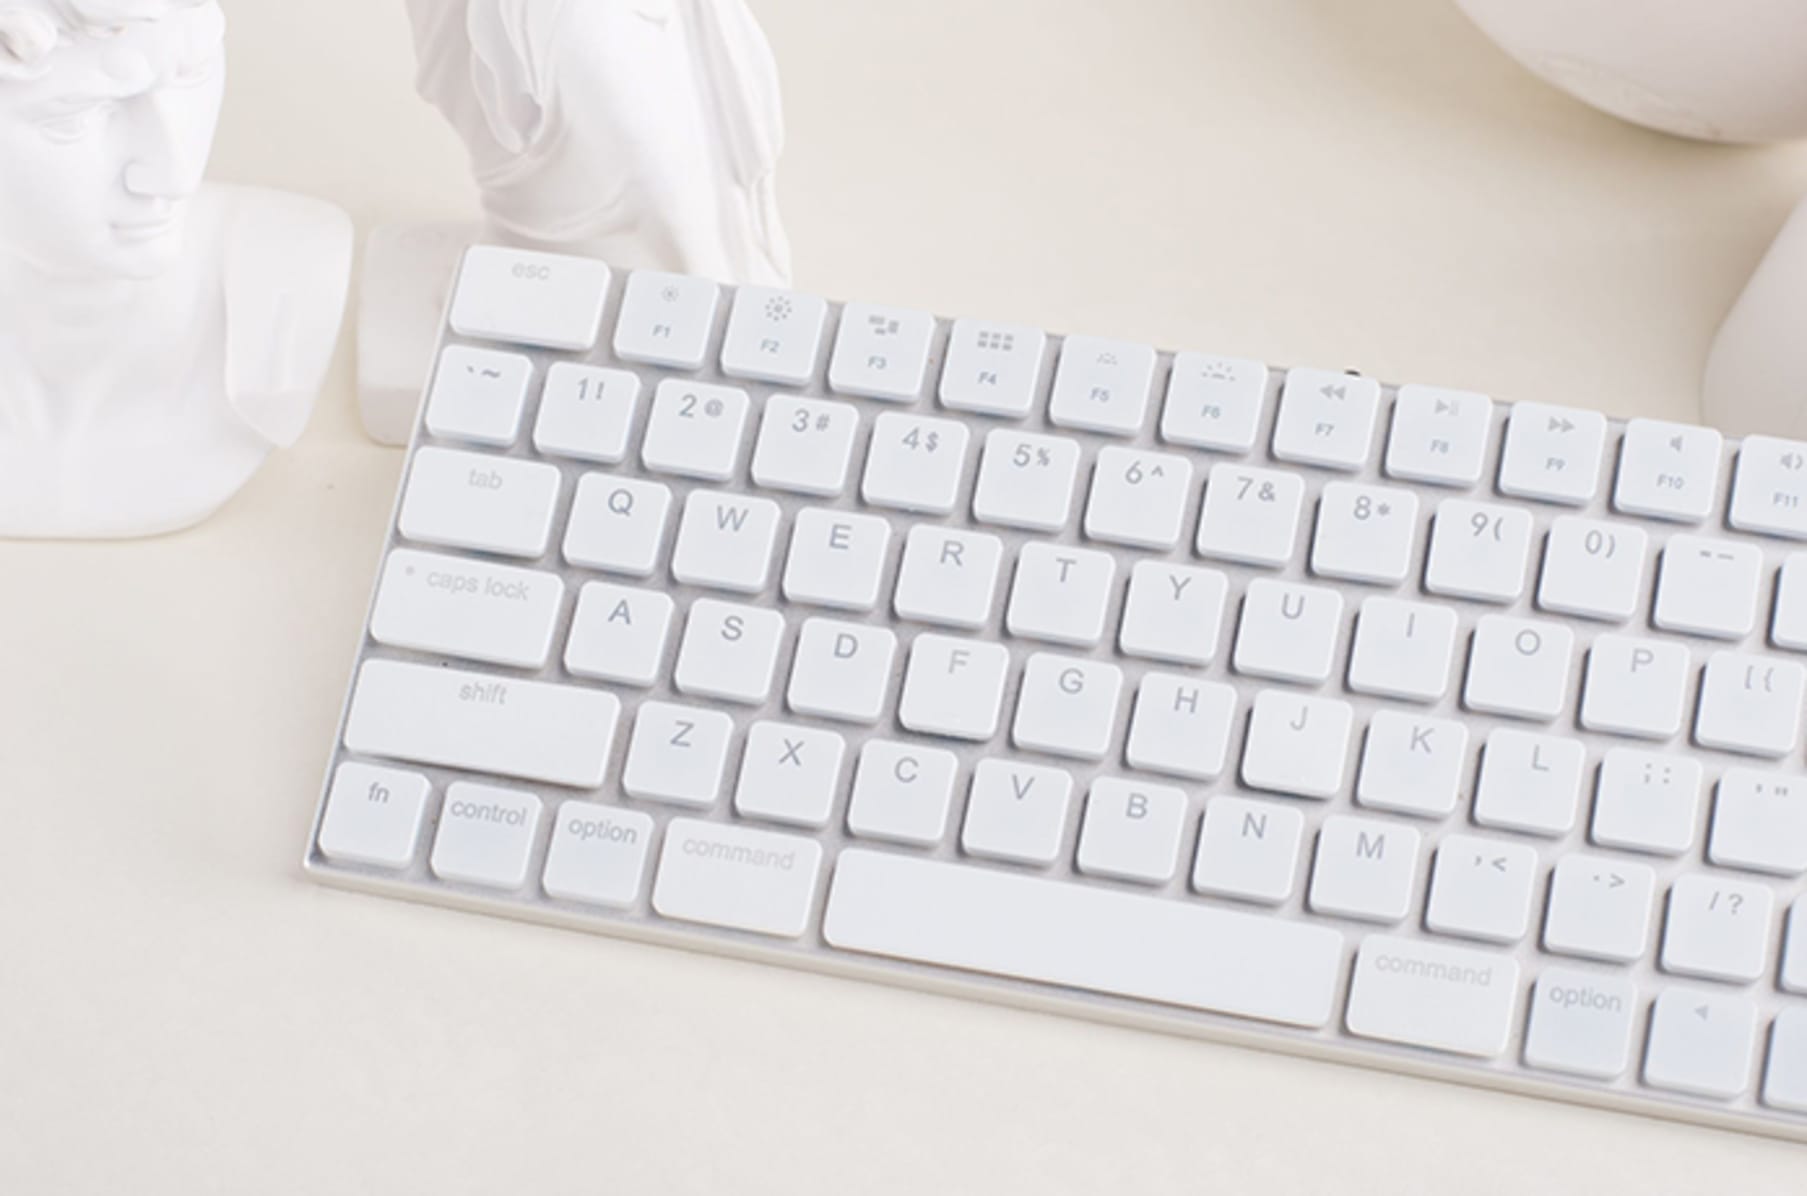 Taptek - Thinnest Wireless Mac Mechanical Keyboard | Indiegogo